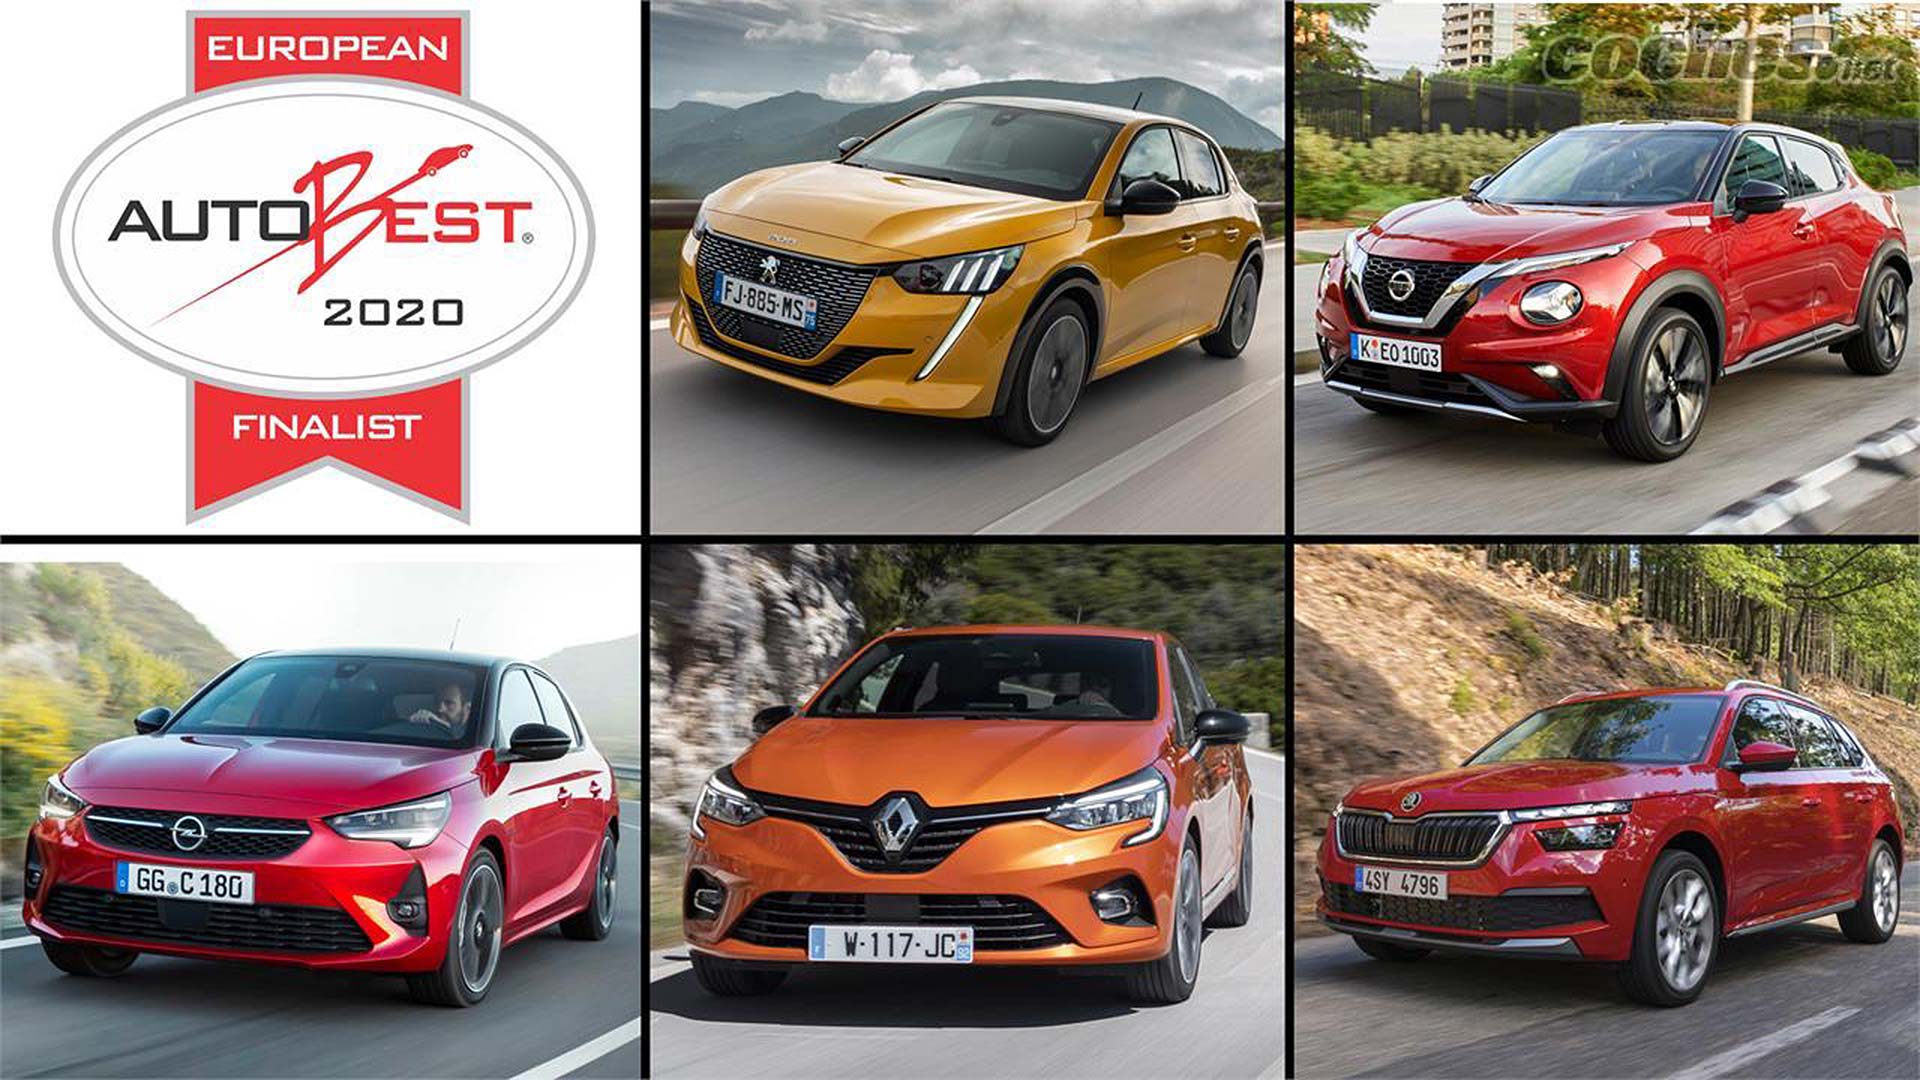 AUTOBEST 2020 finalists - Nissan Juke, Peugeot 208, Renault Clio, Skoda Kamiq, Vauxhall Corsa